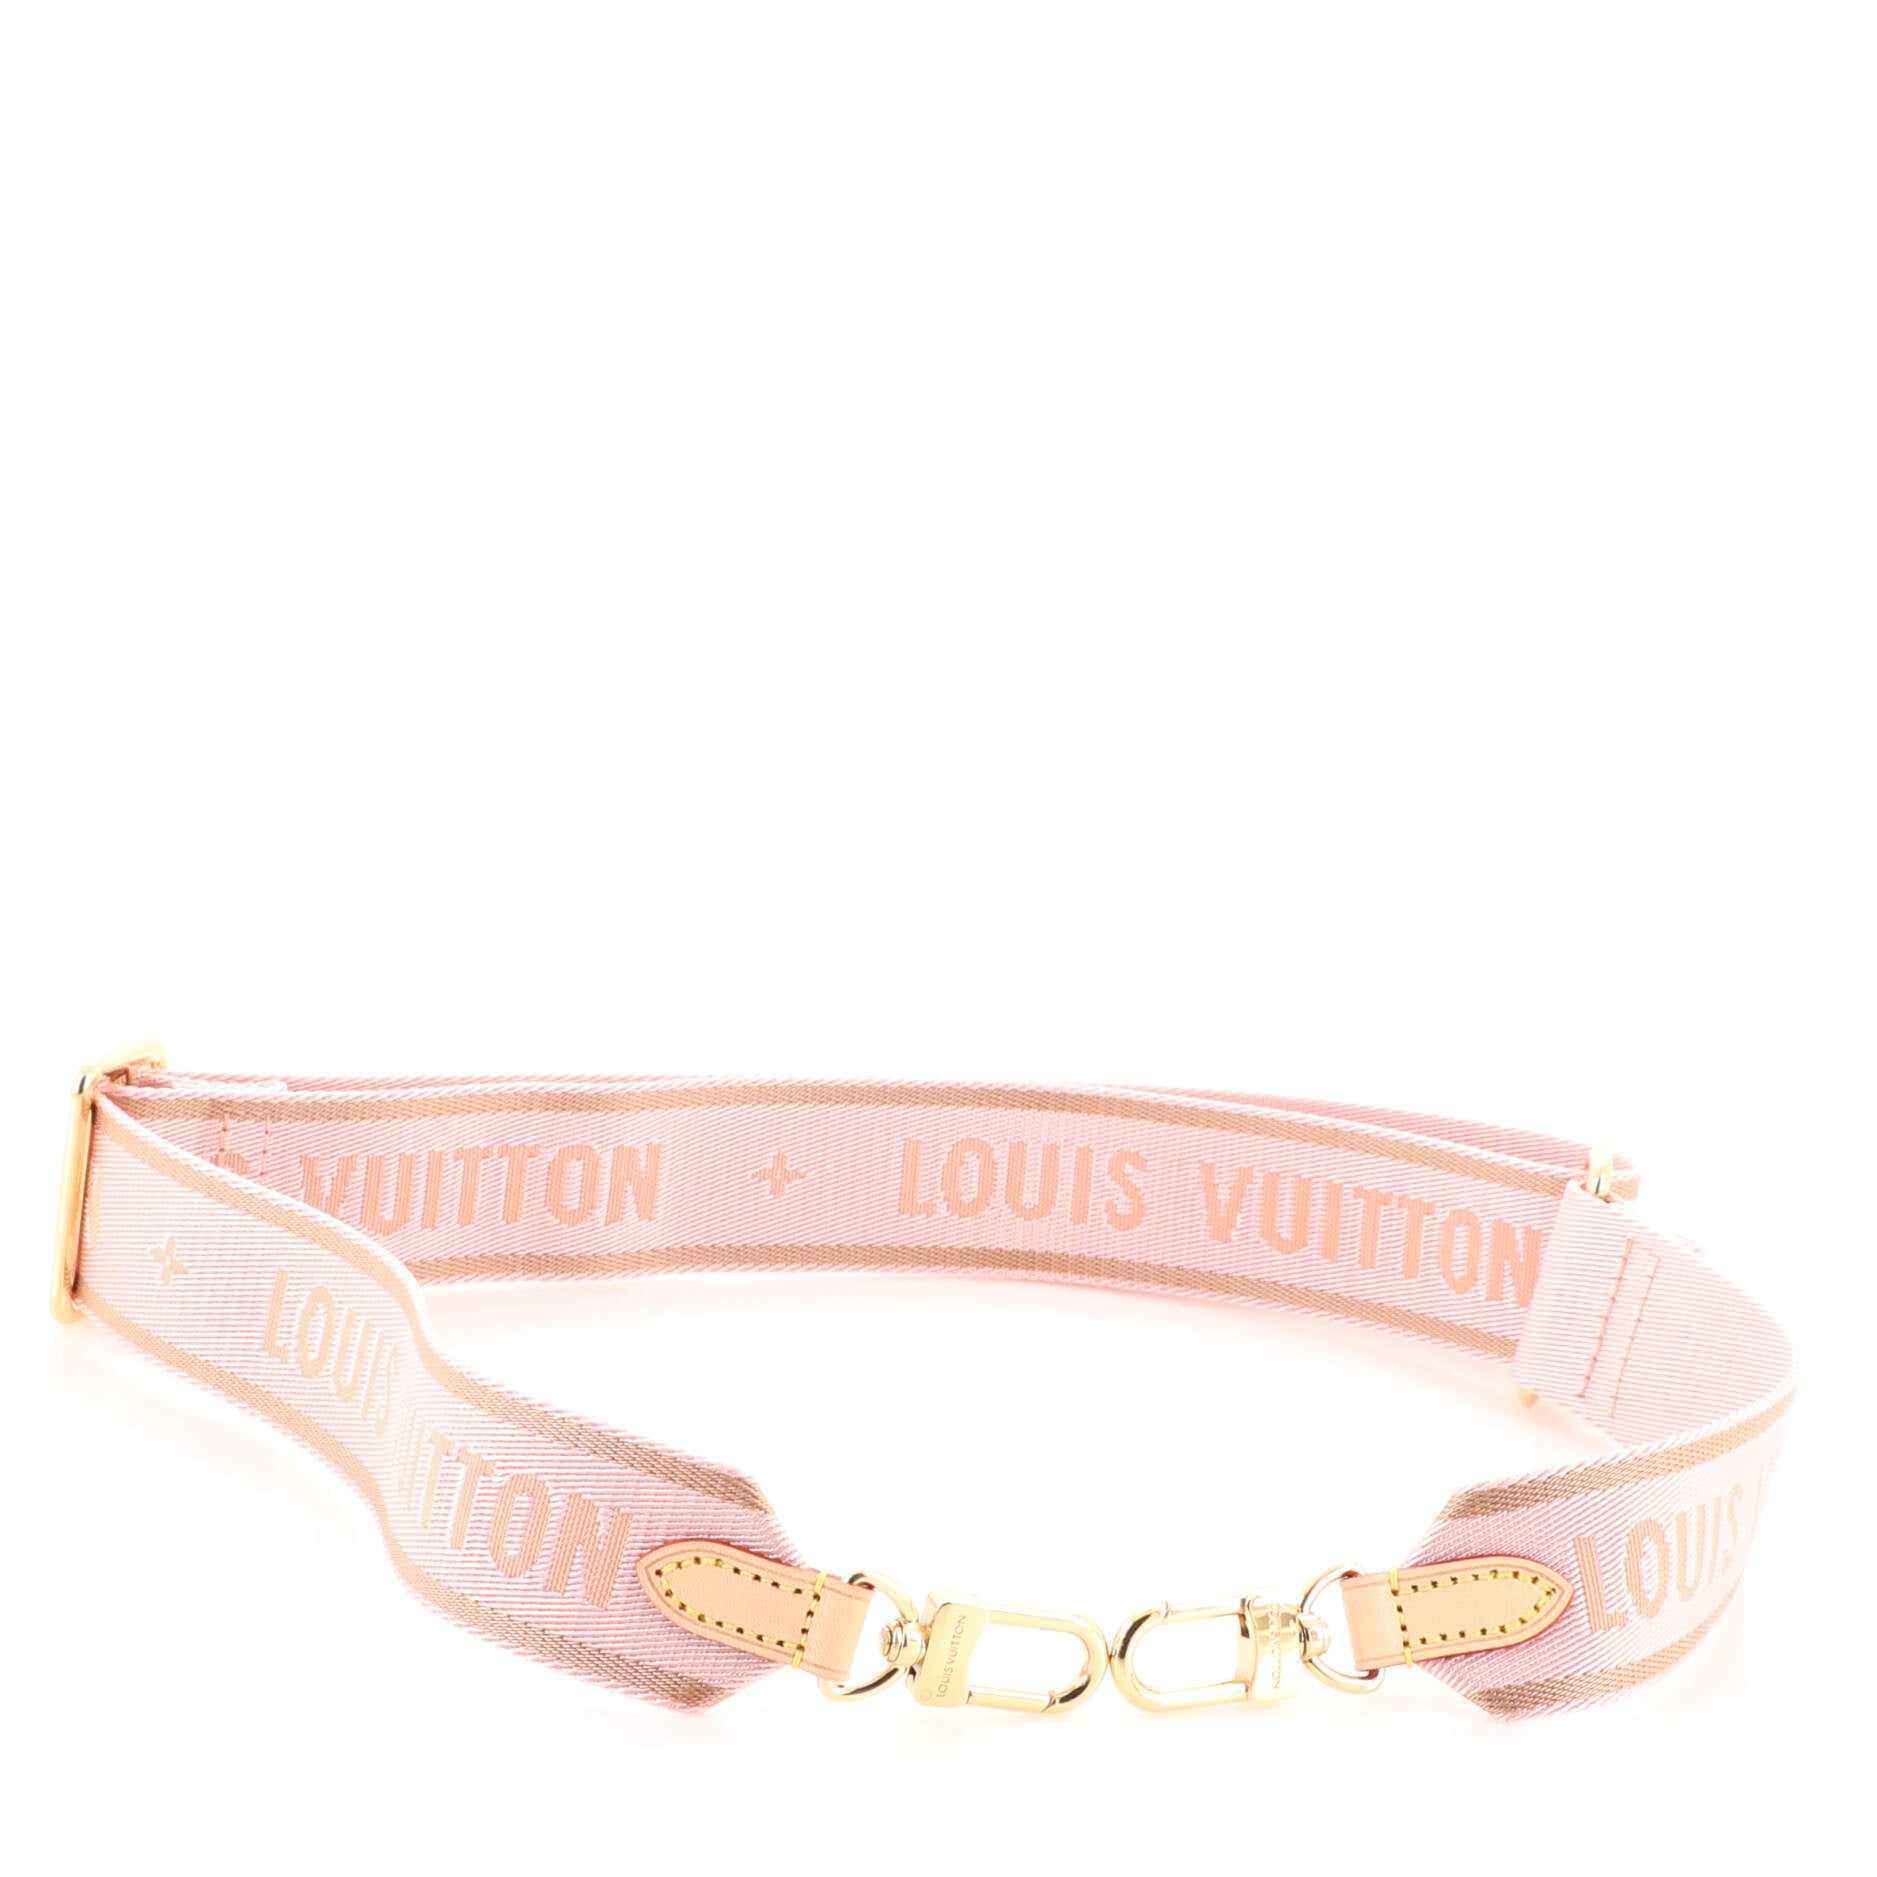 Louis Vuitton Vuittamins Sporty Jacquard Pink Knit Top